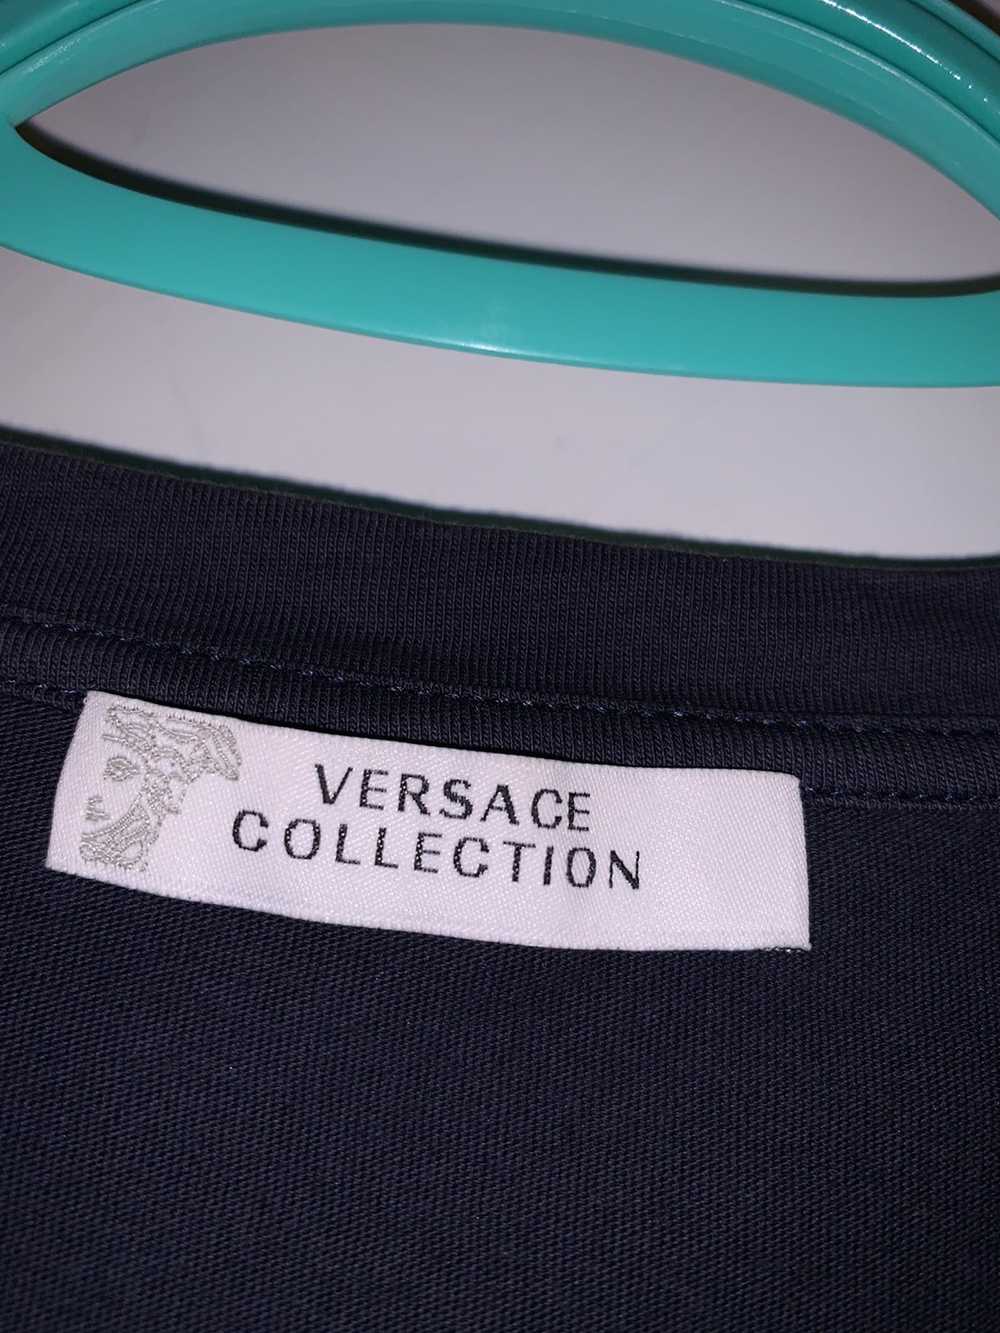 Versace Versace Collection Medusa T Shirt - image 5